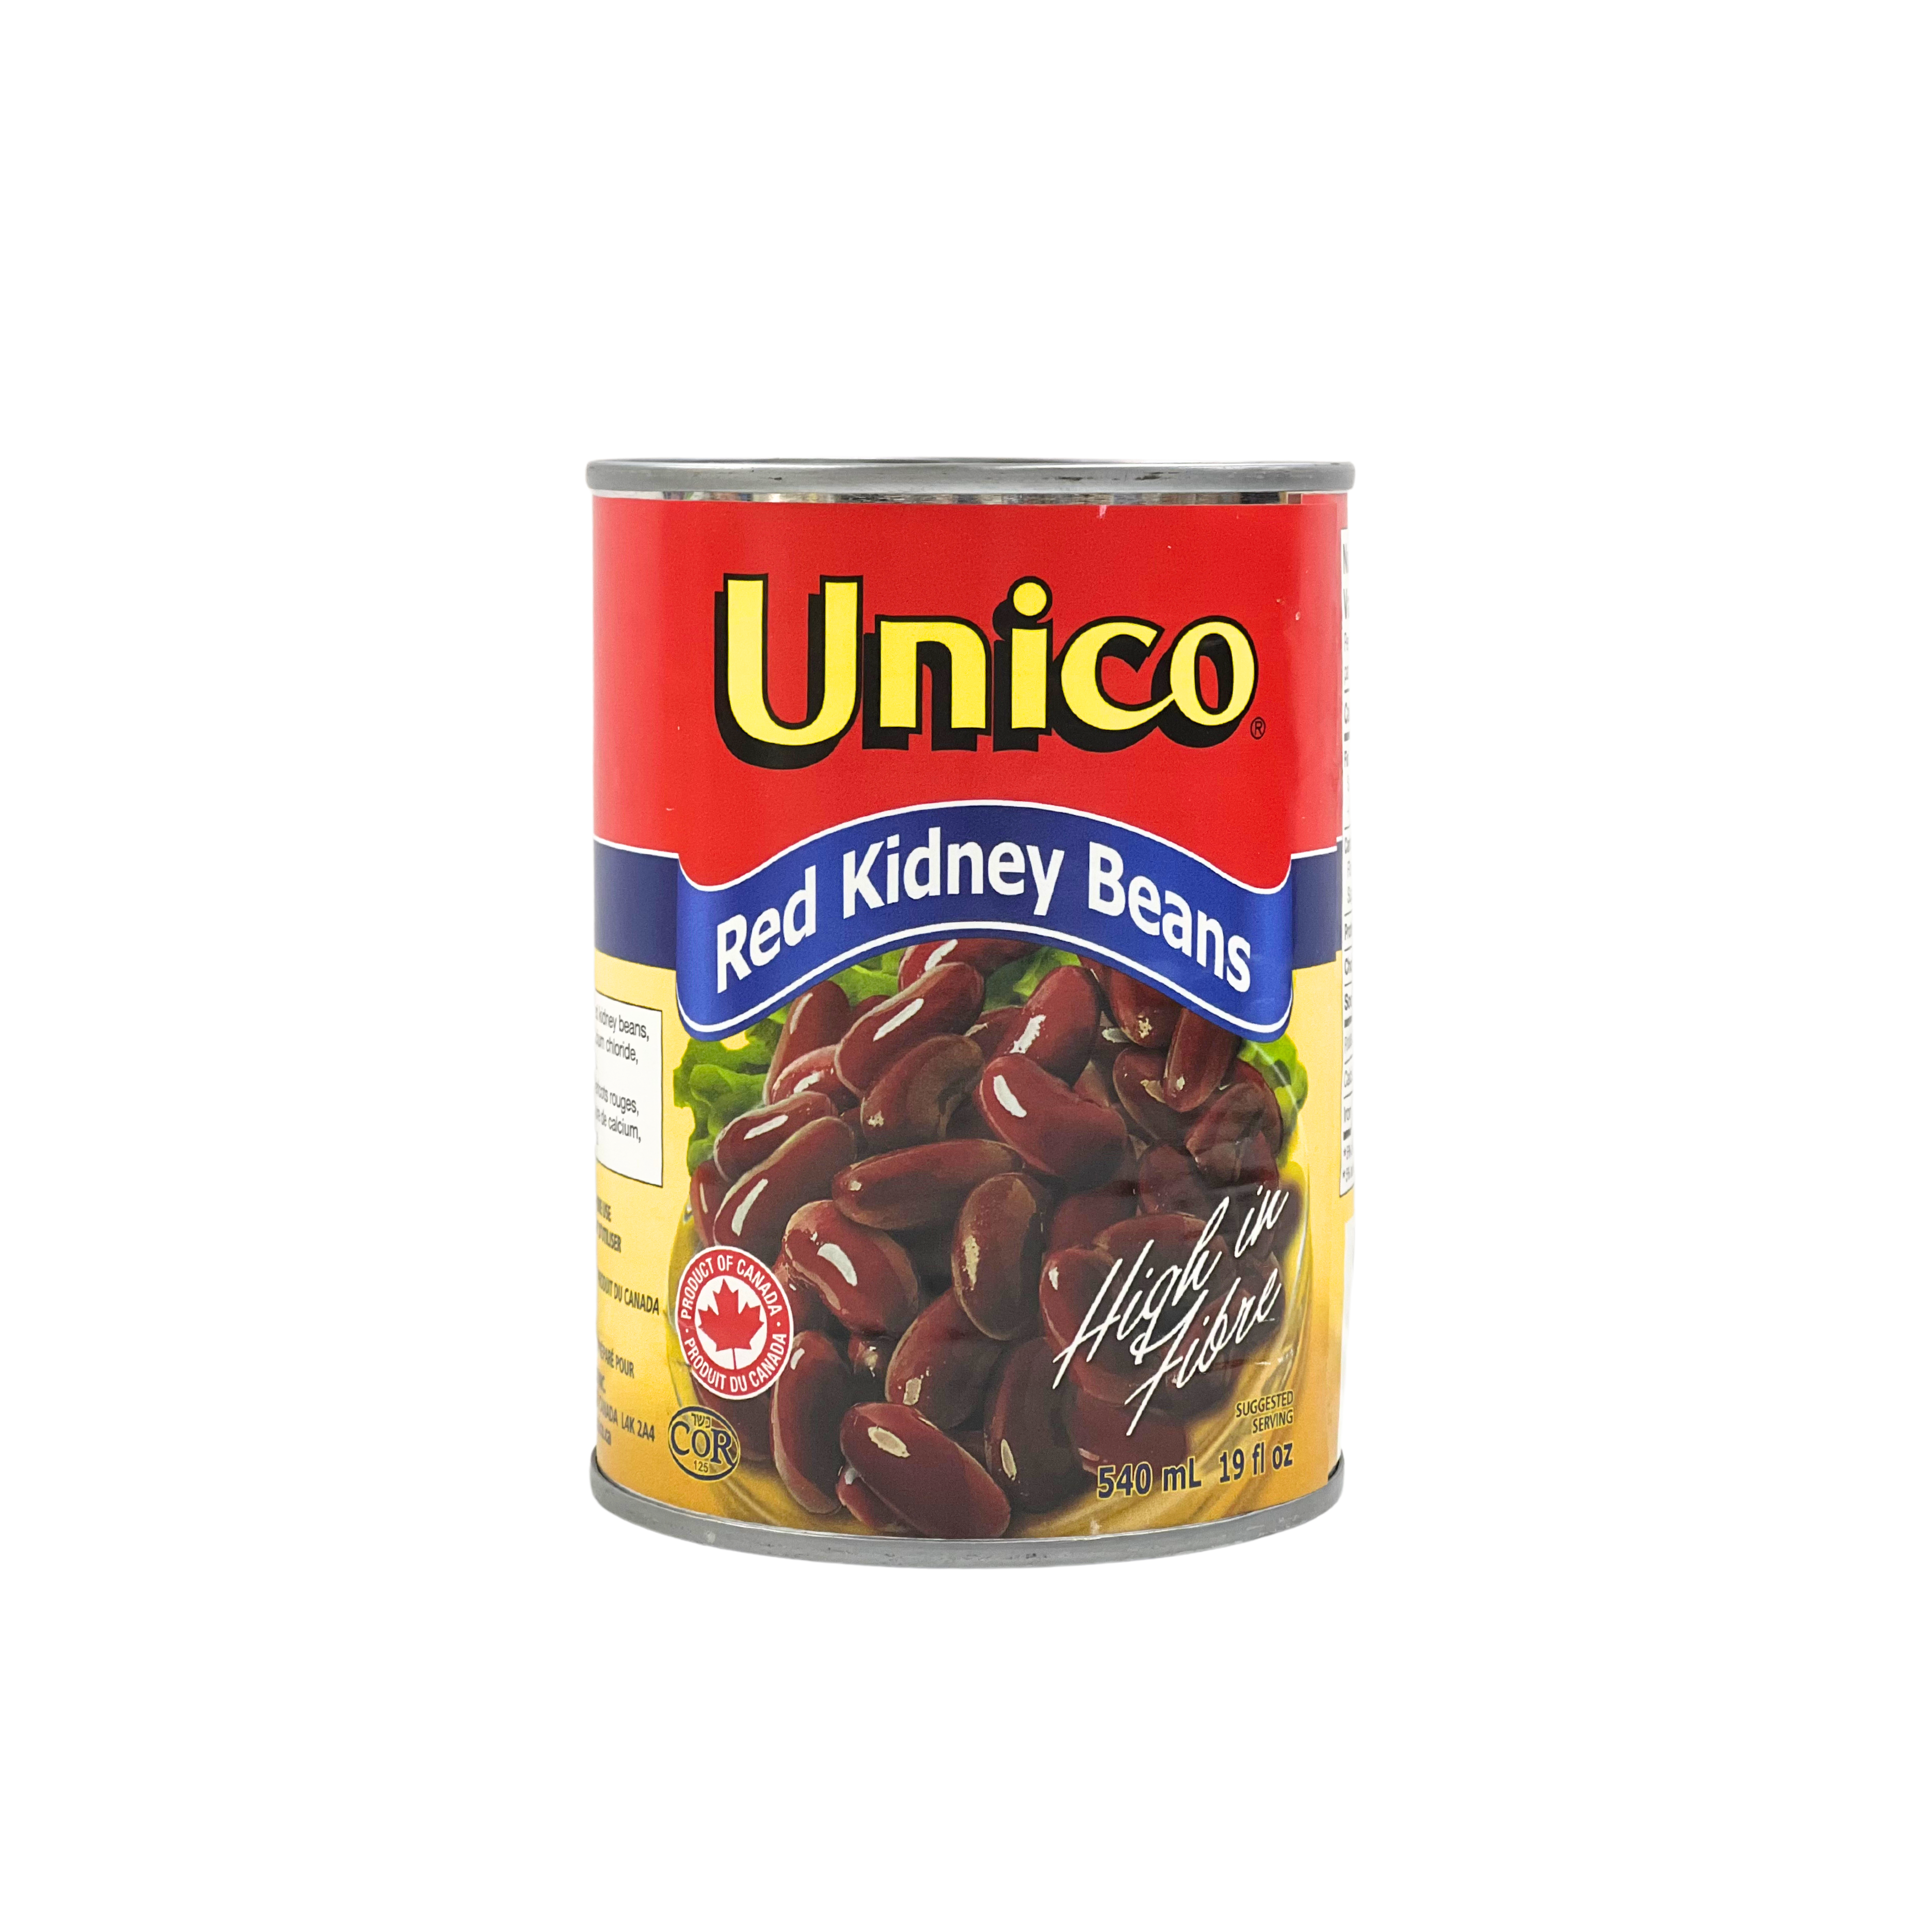 Unico Red Kidney Beans 540ml